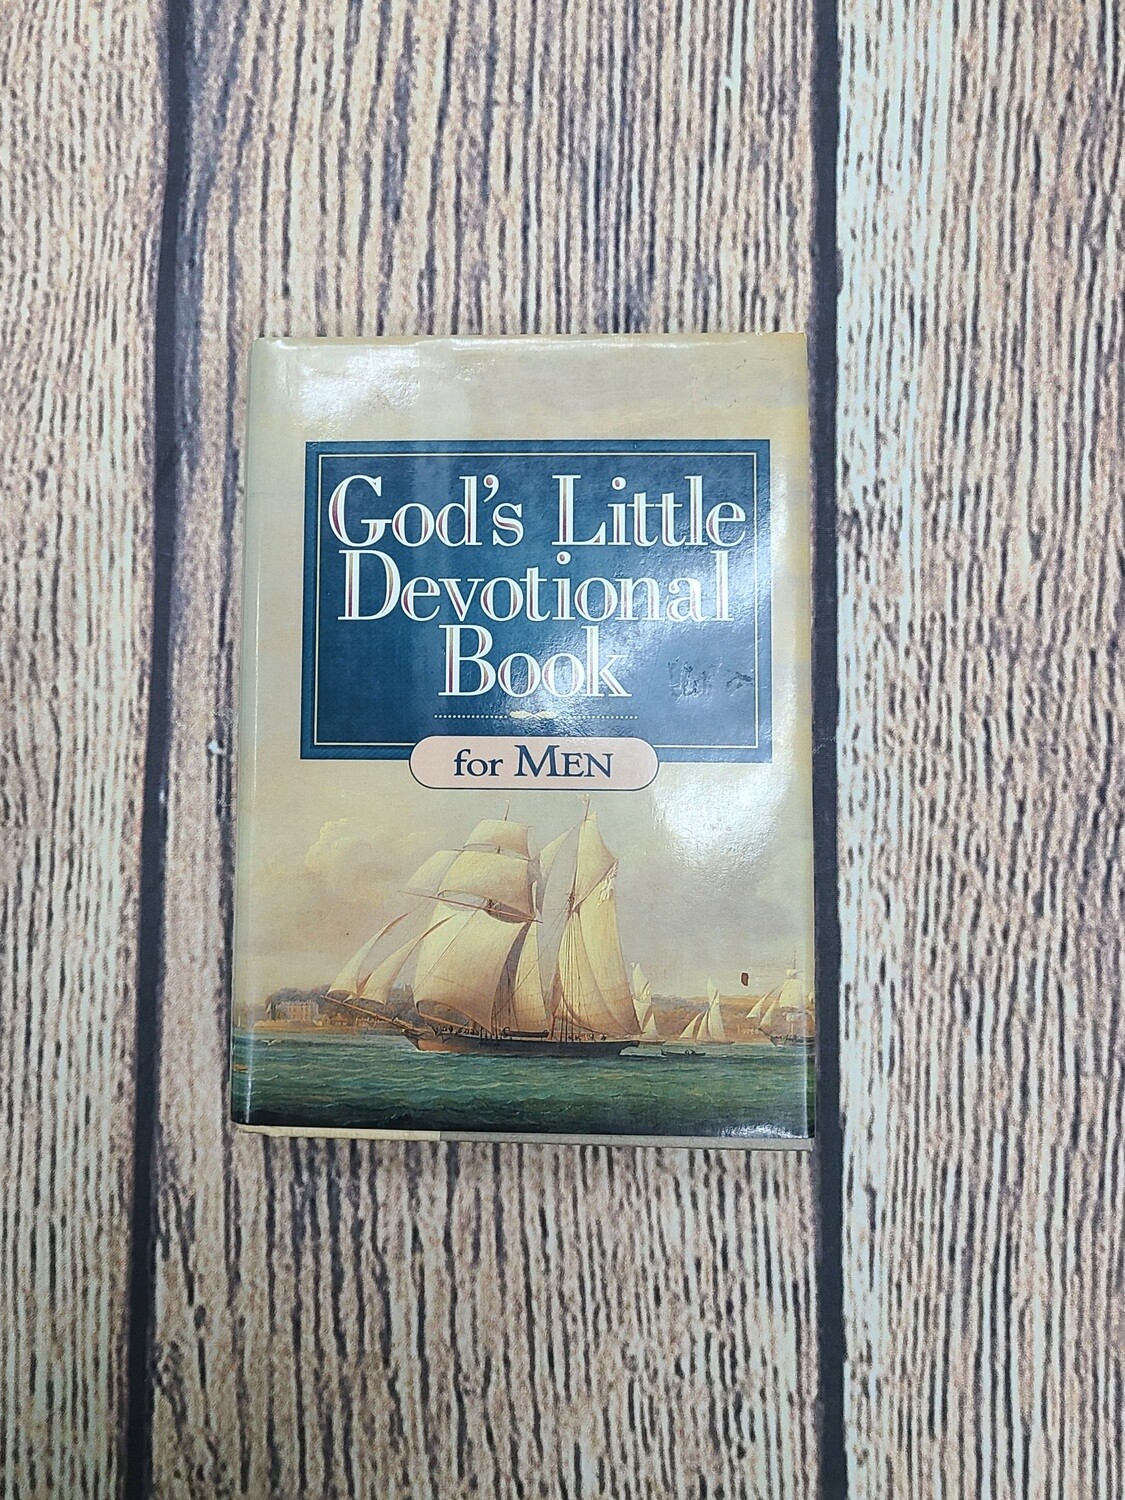 God's Little Devotional Book for Men by Honor Books, Inc.